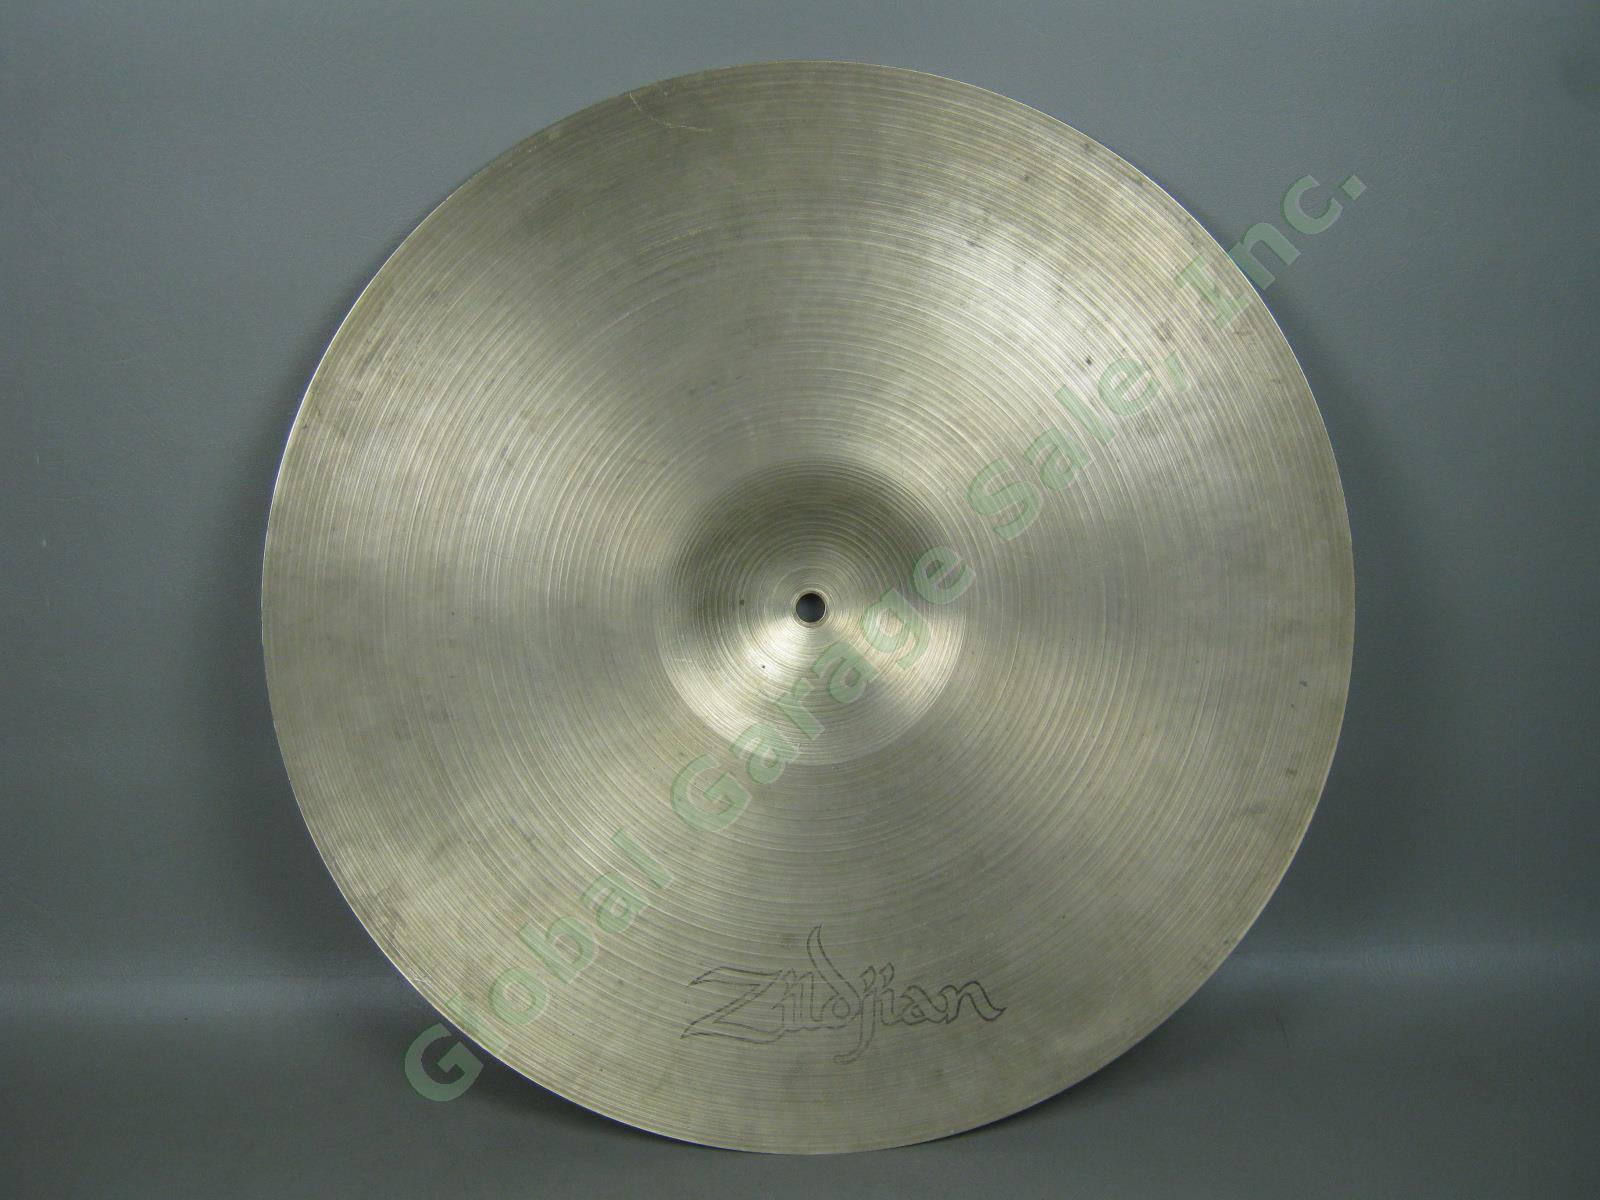 70s 18" Avedis Zildjian Genuine Turkish Crash Ride Cymbal Made In USA 1587 Grams 3